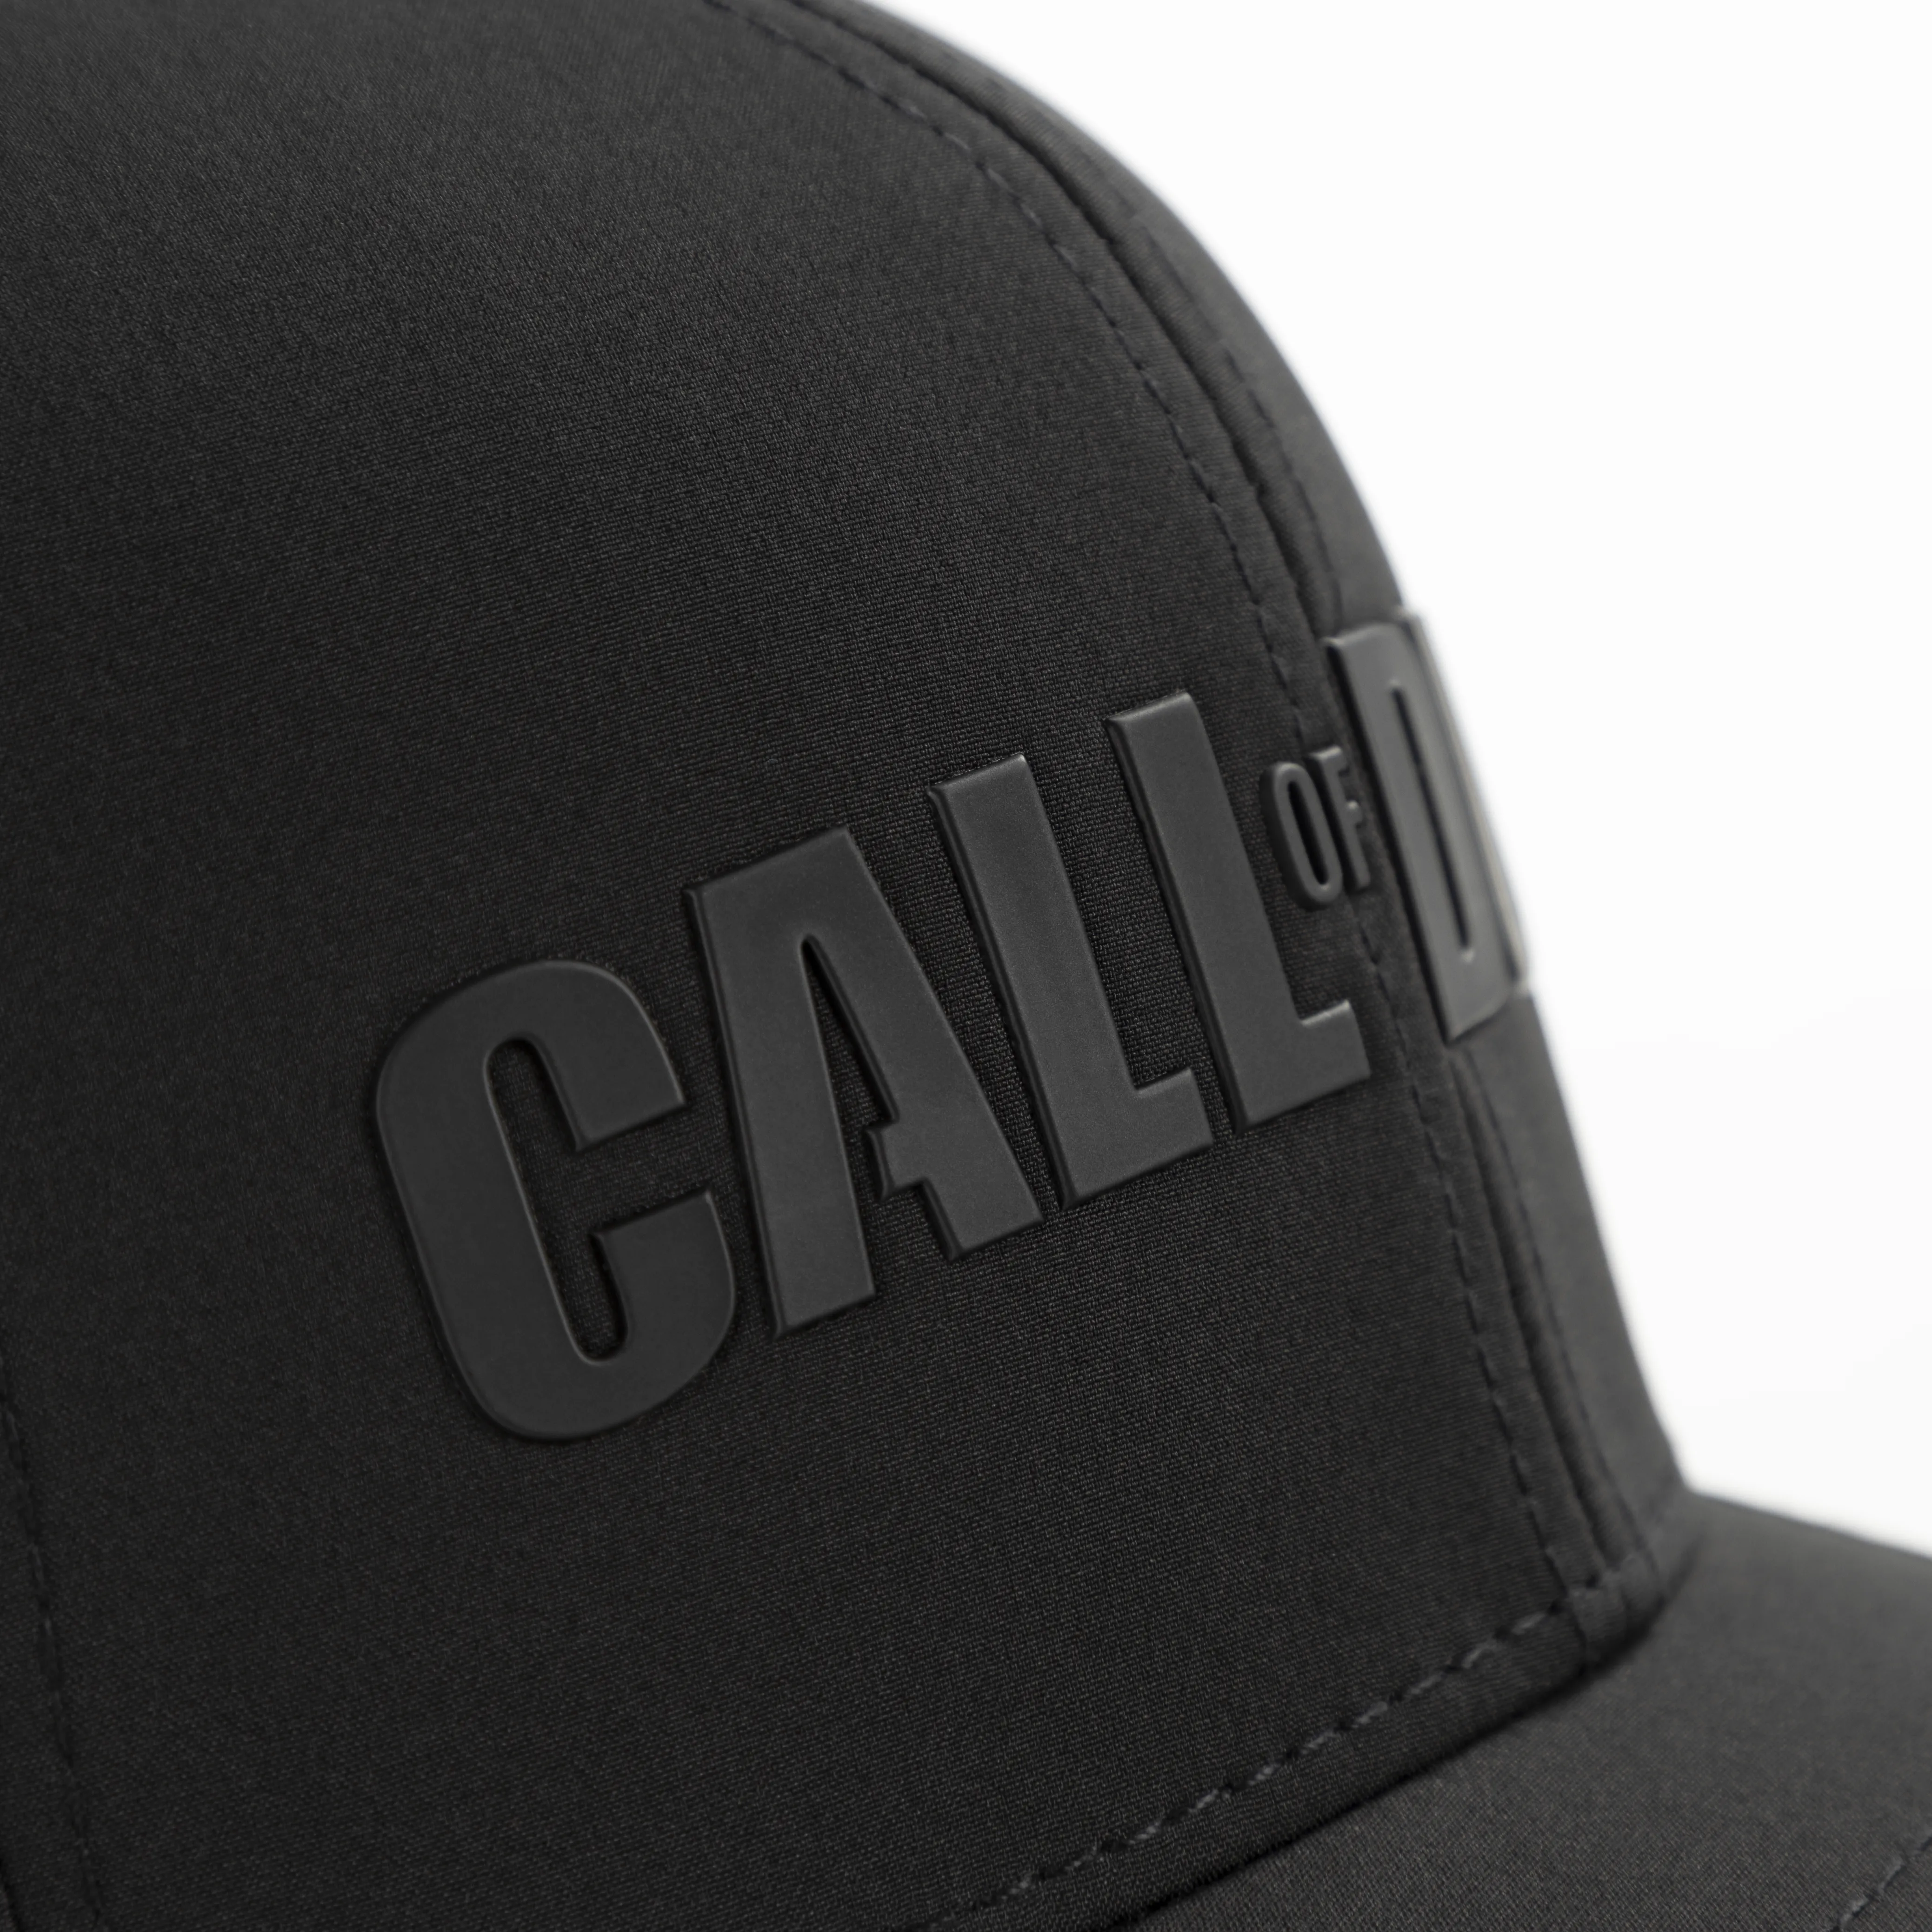 Call of Duty Baseball Cap "Stealth" Black Image 2